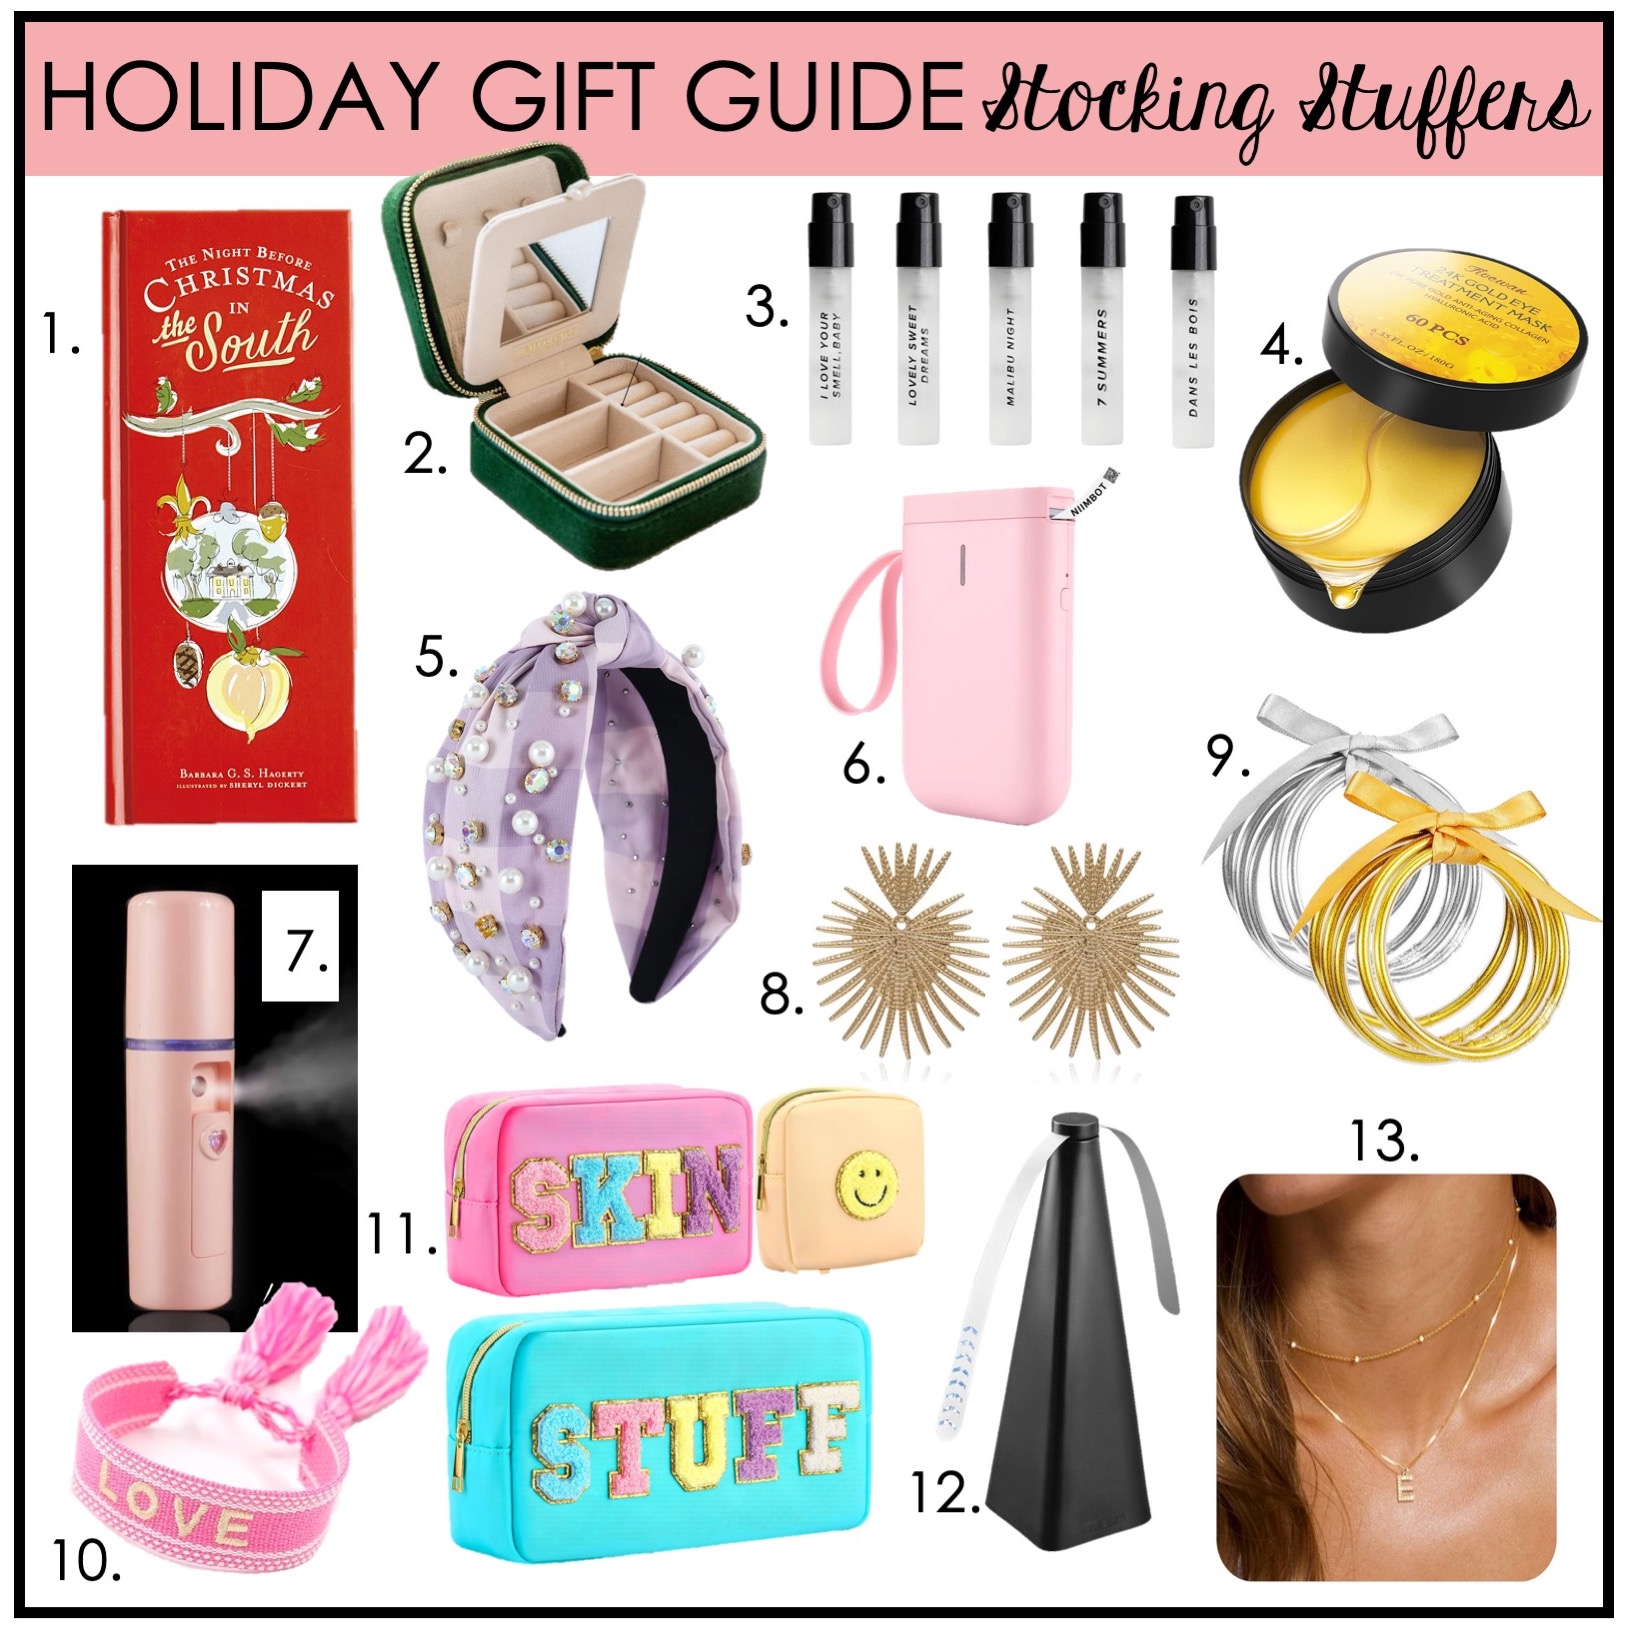 Stocking Stuffer Ideas Under $10, Gift Guide